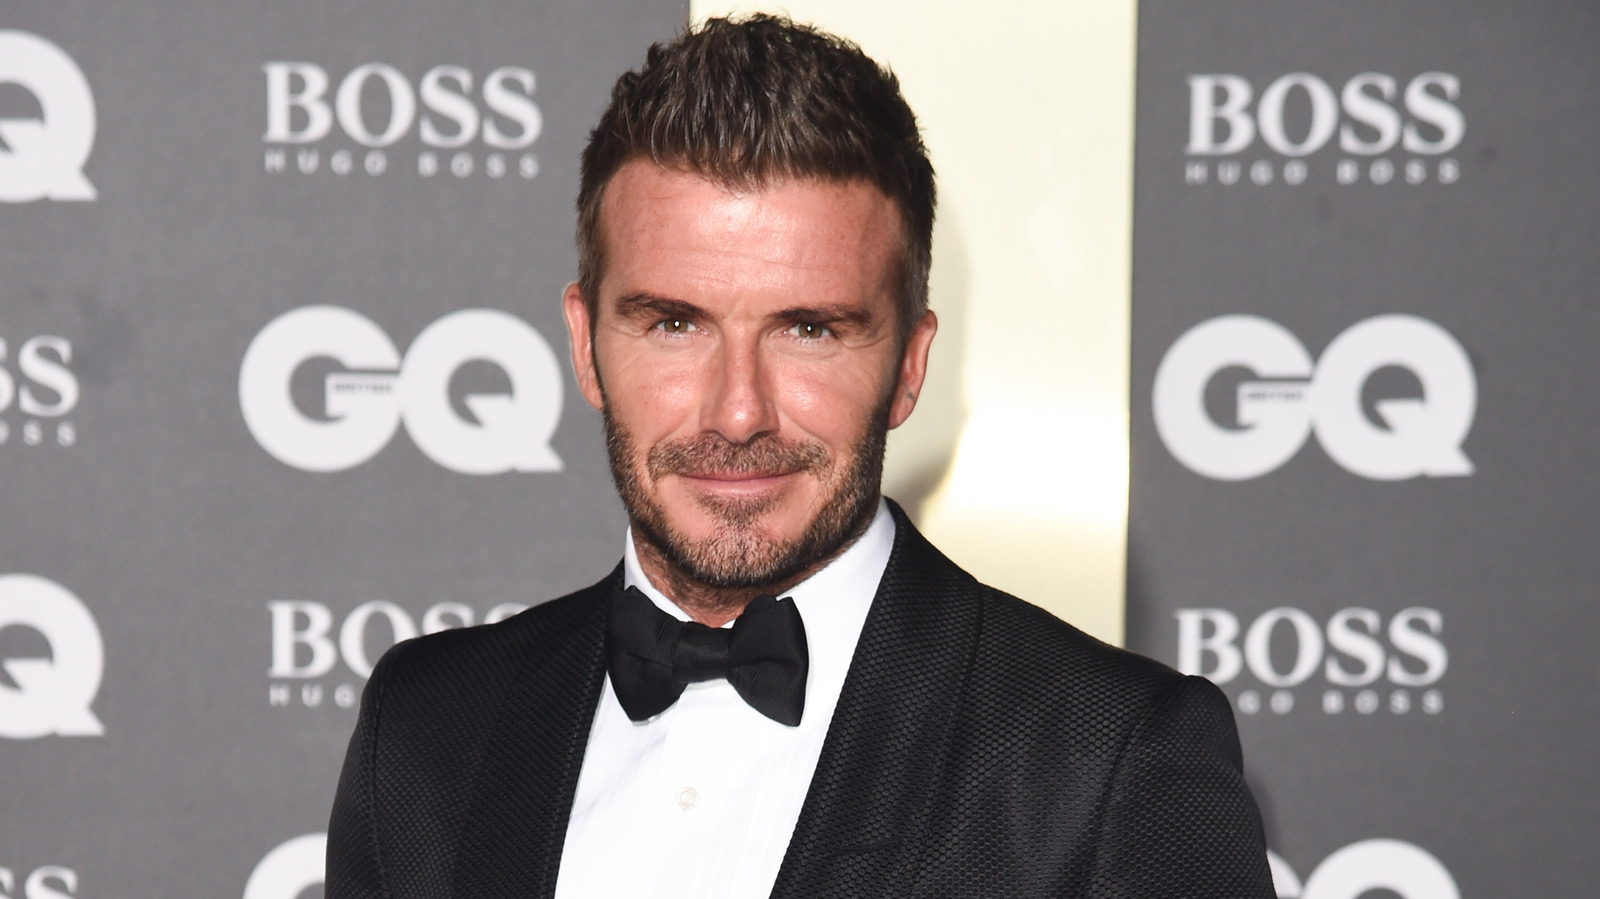 A Look At David Beckham's Legal Troubles